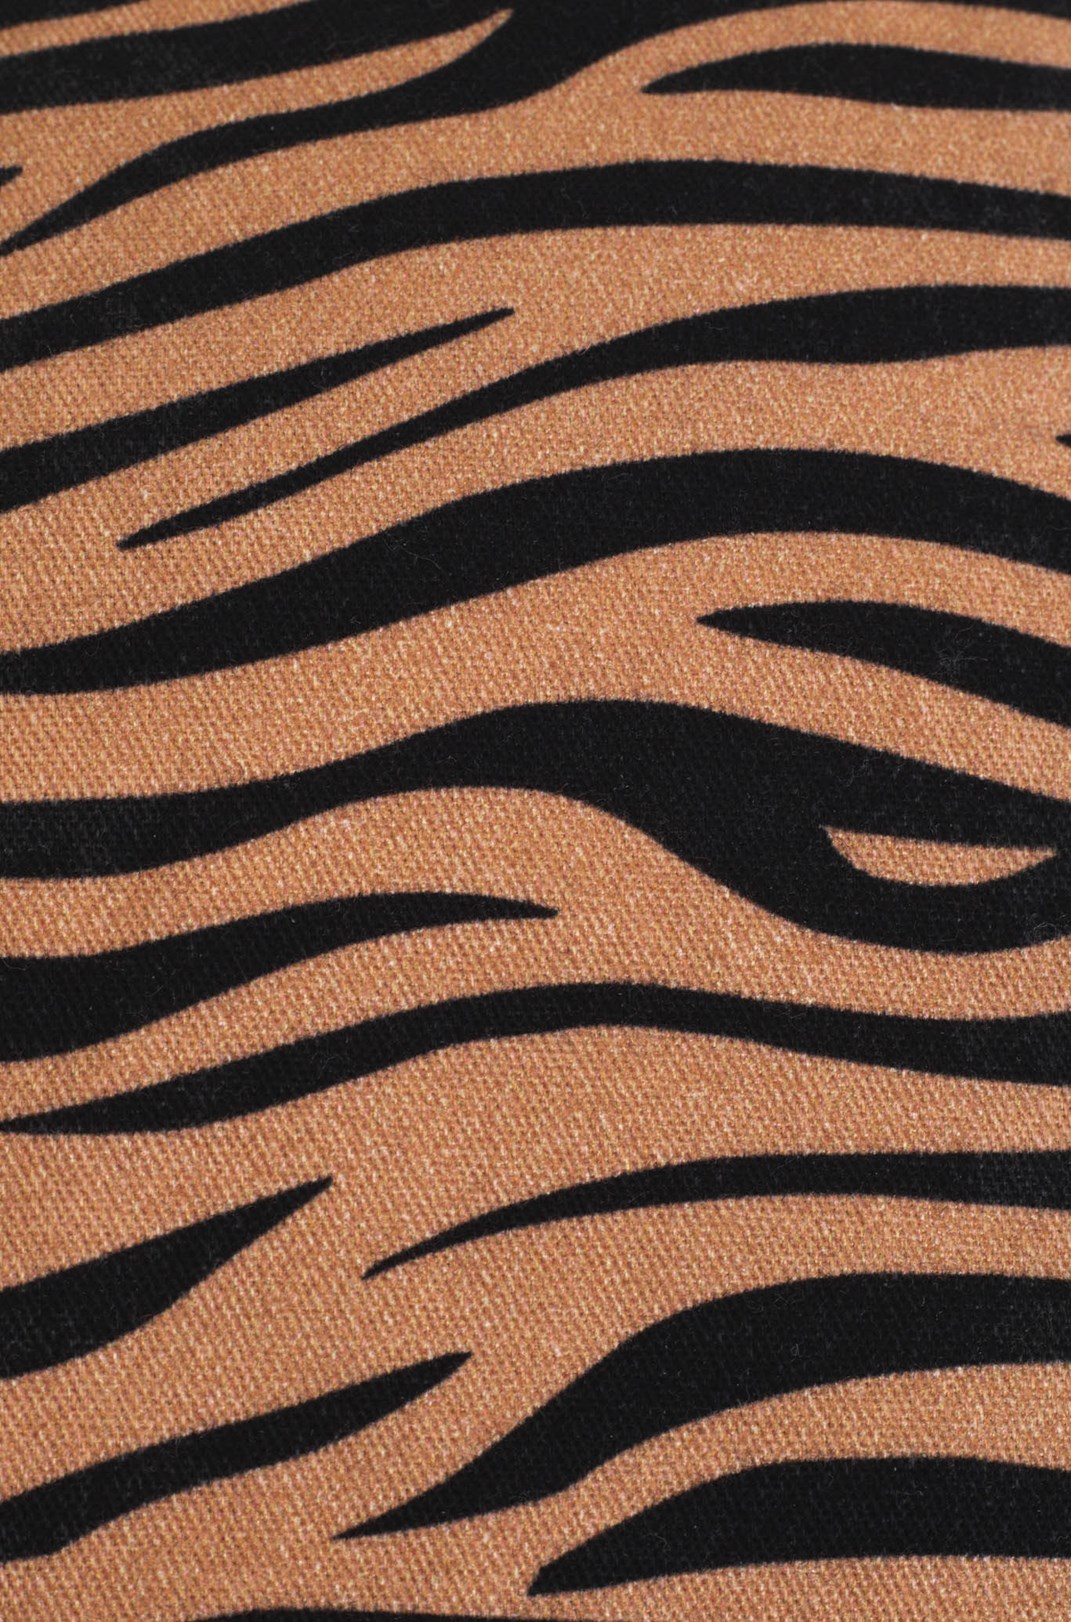 Bucket Approve Animal Print Tigre Laranja